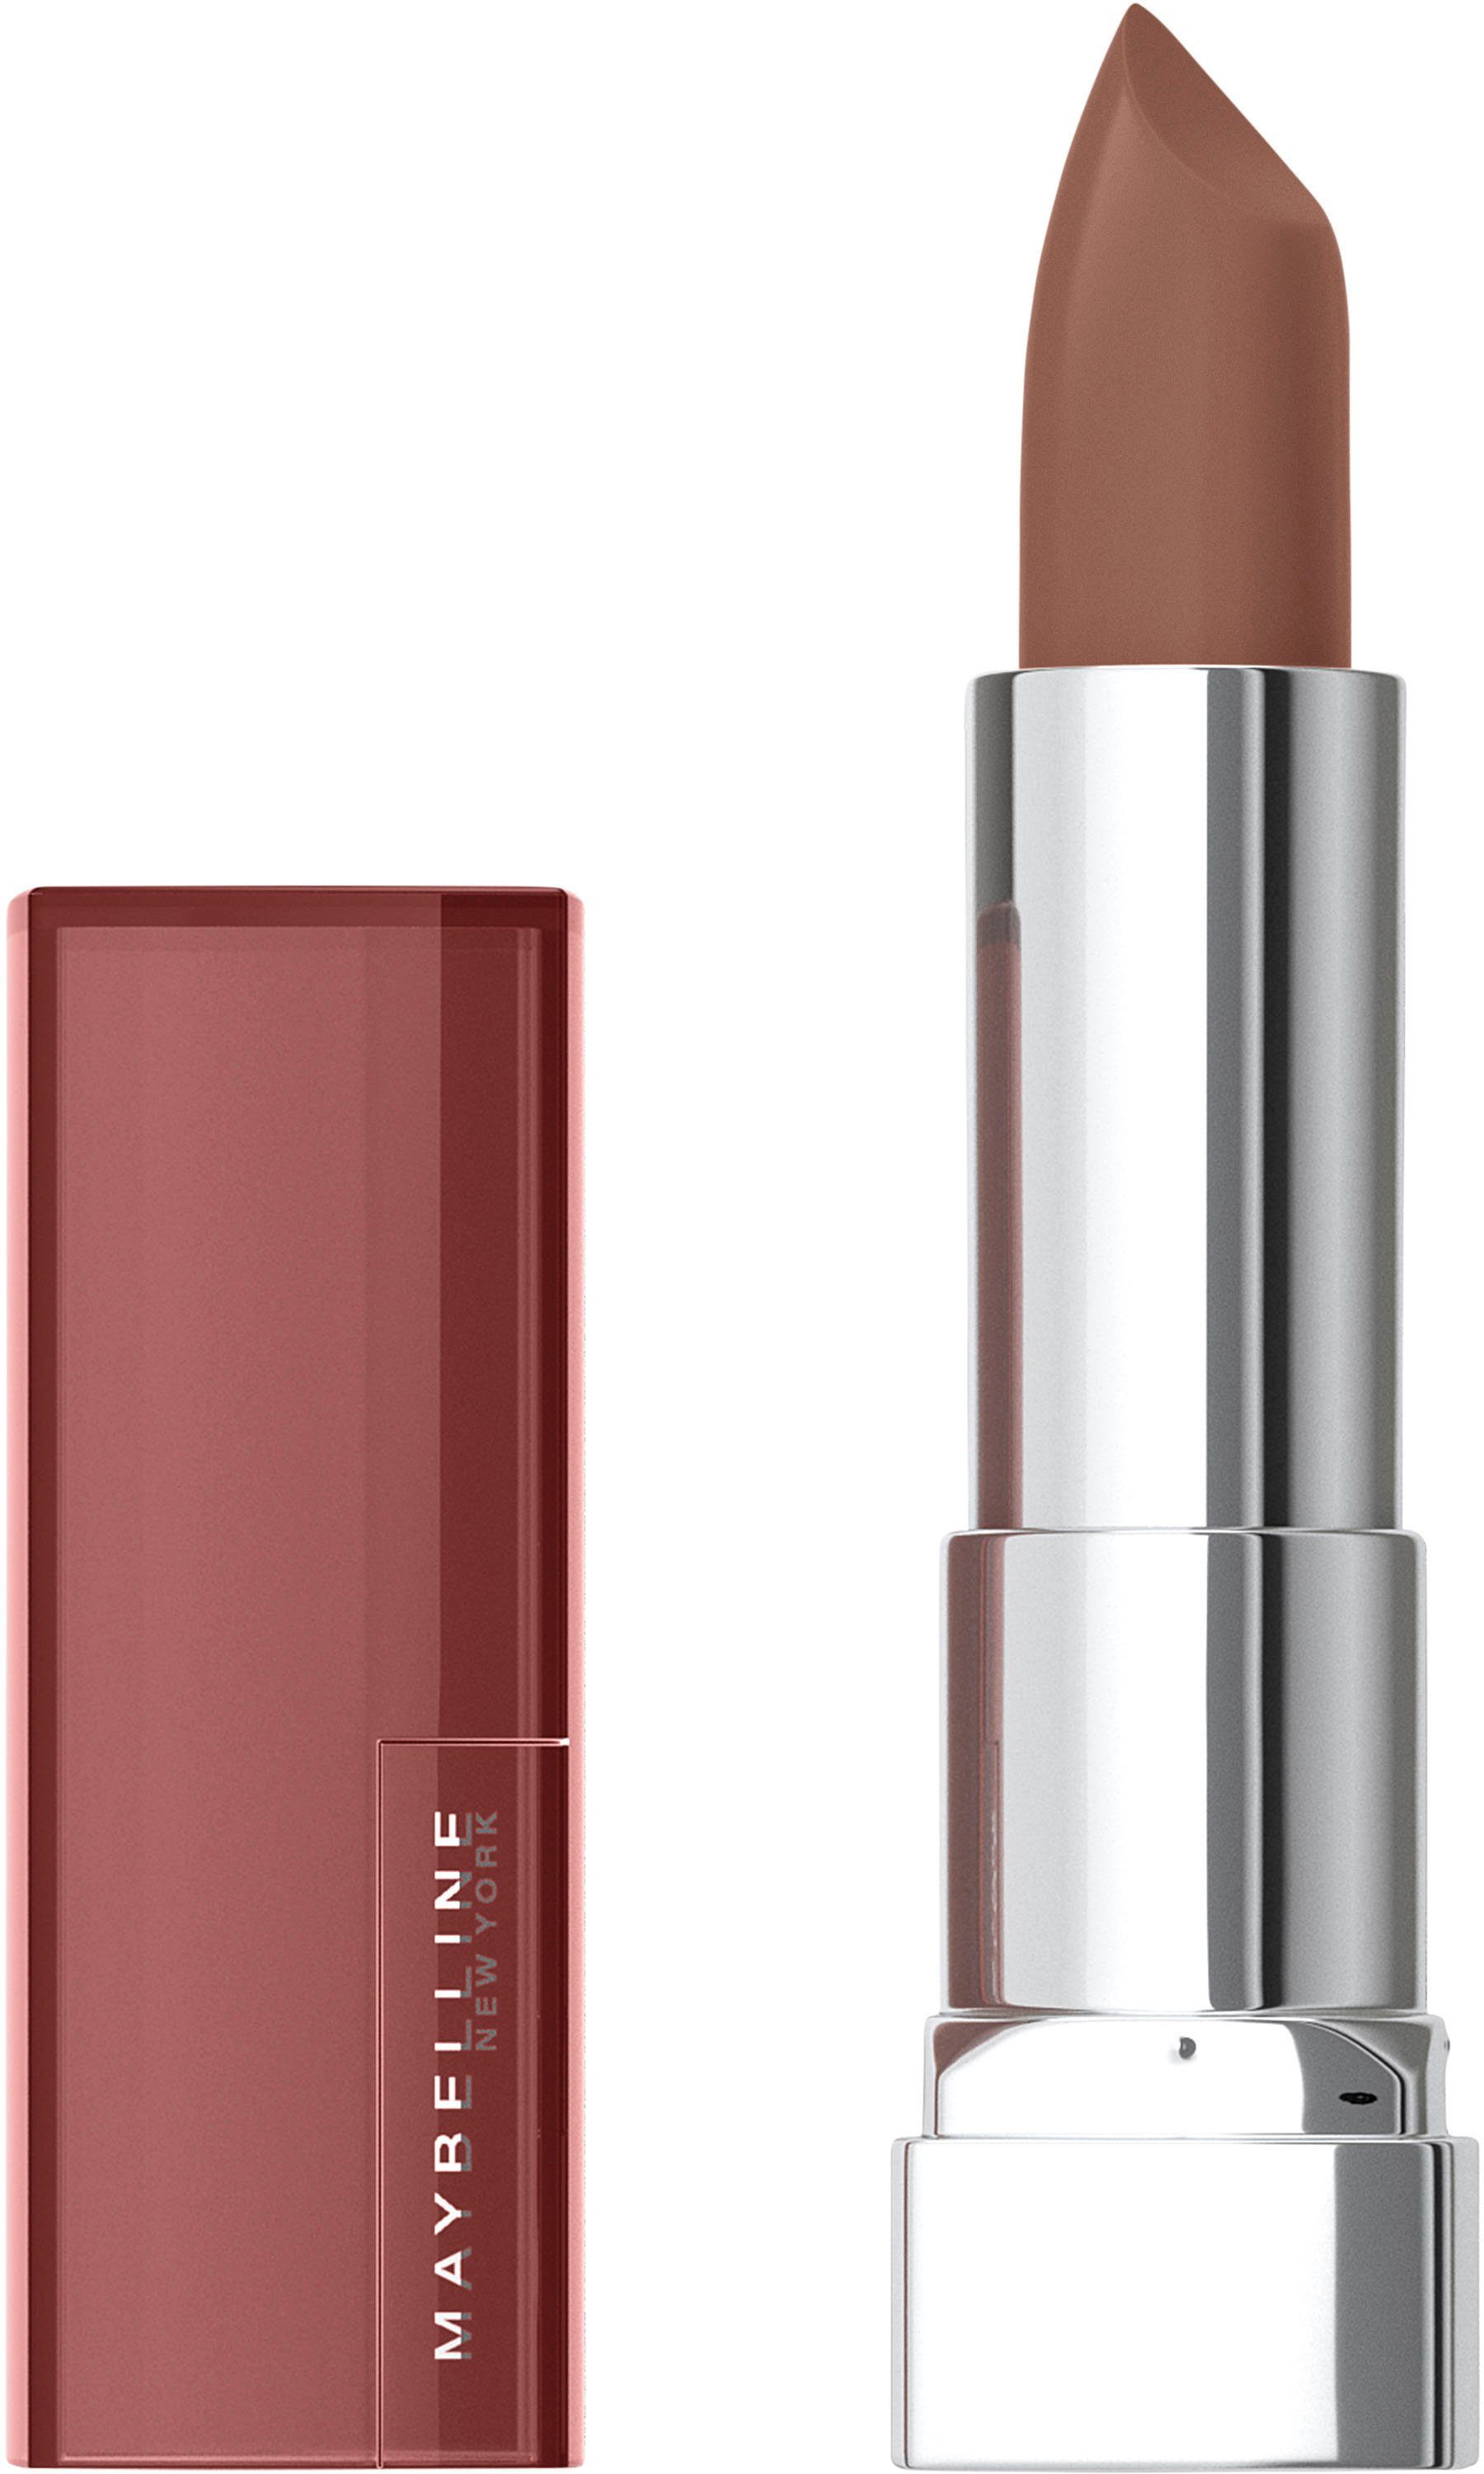 YORK 930 Sensational NEW MAYBELLINE Color Mattes Lippenstift Nude Creamy Embrace